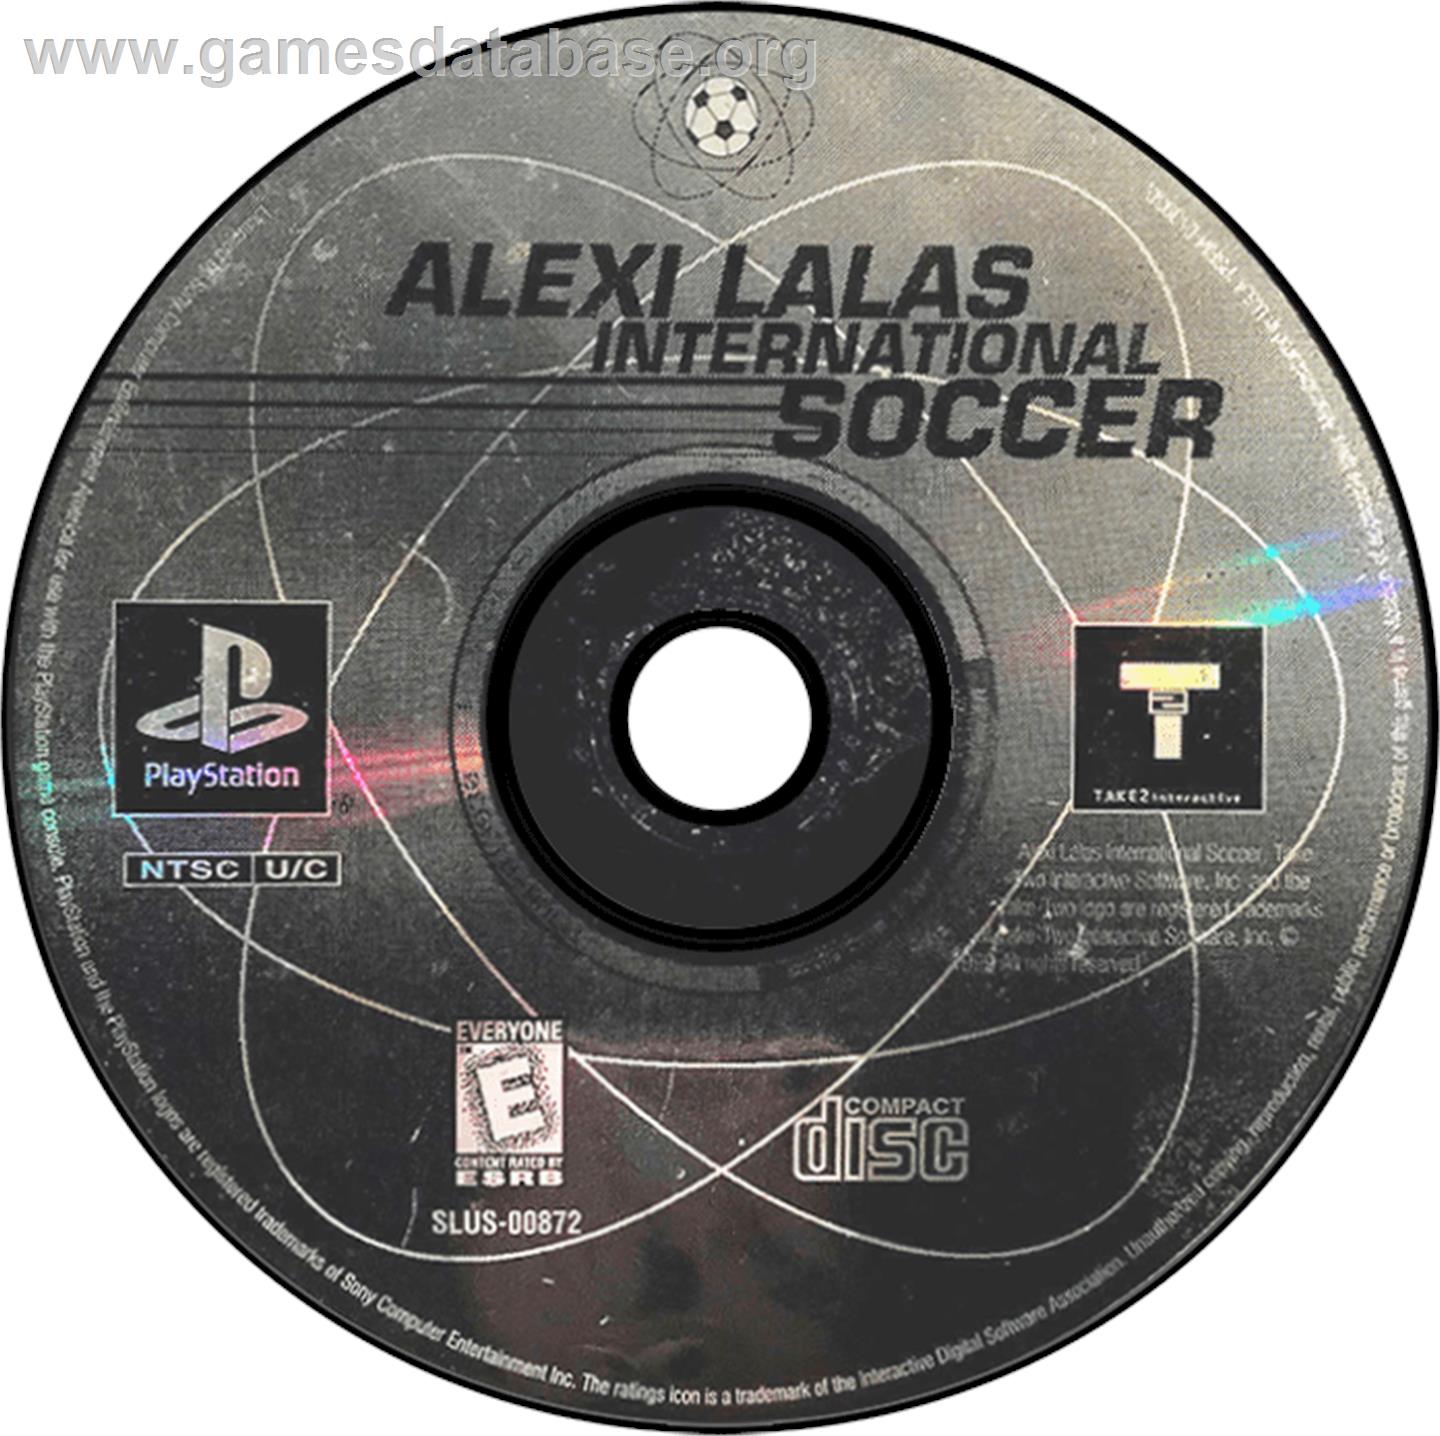 Alexi Lalas International Soccer - Sony Playstation - Artwork - Disc